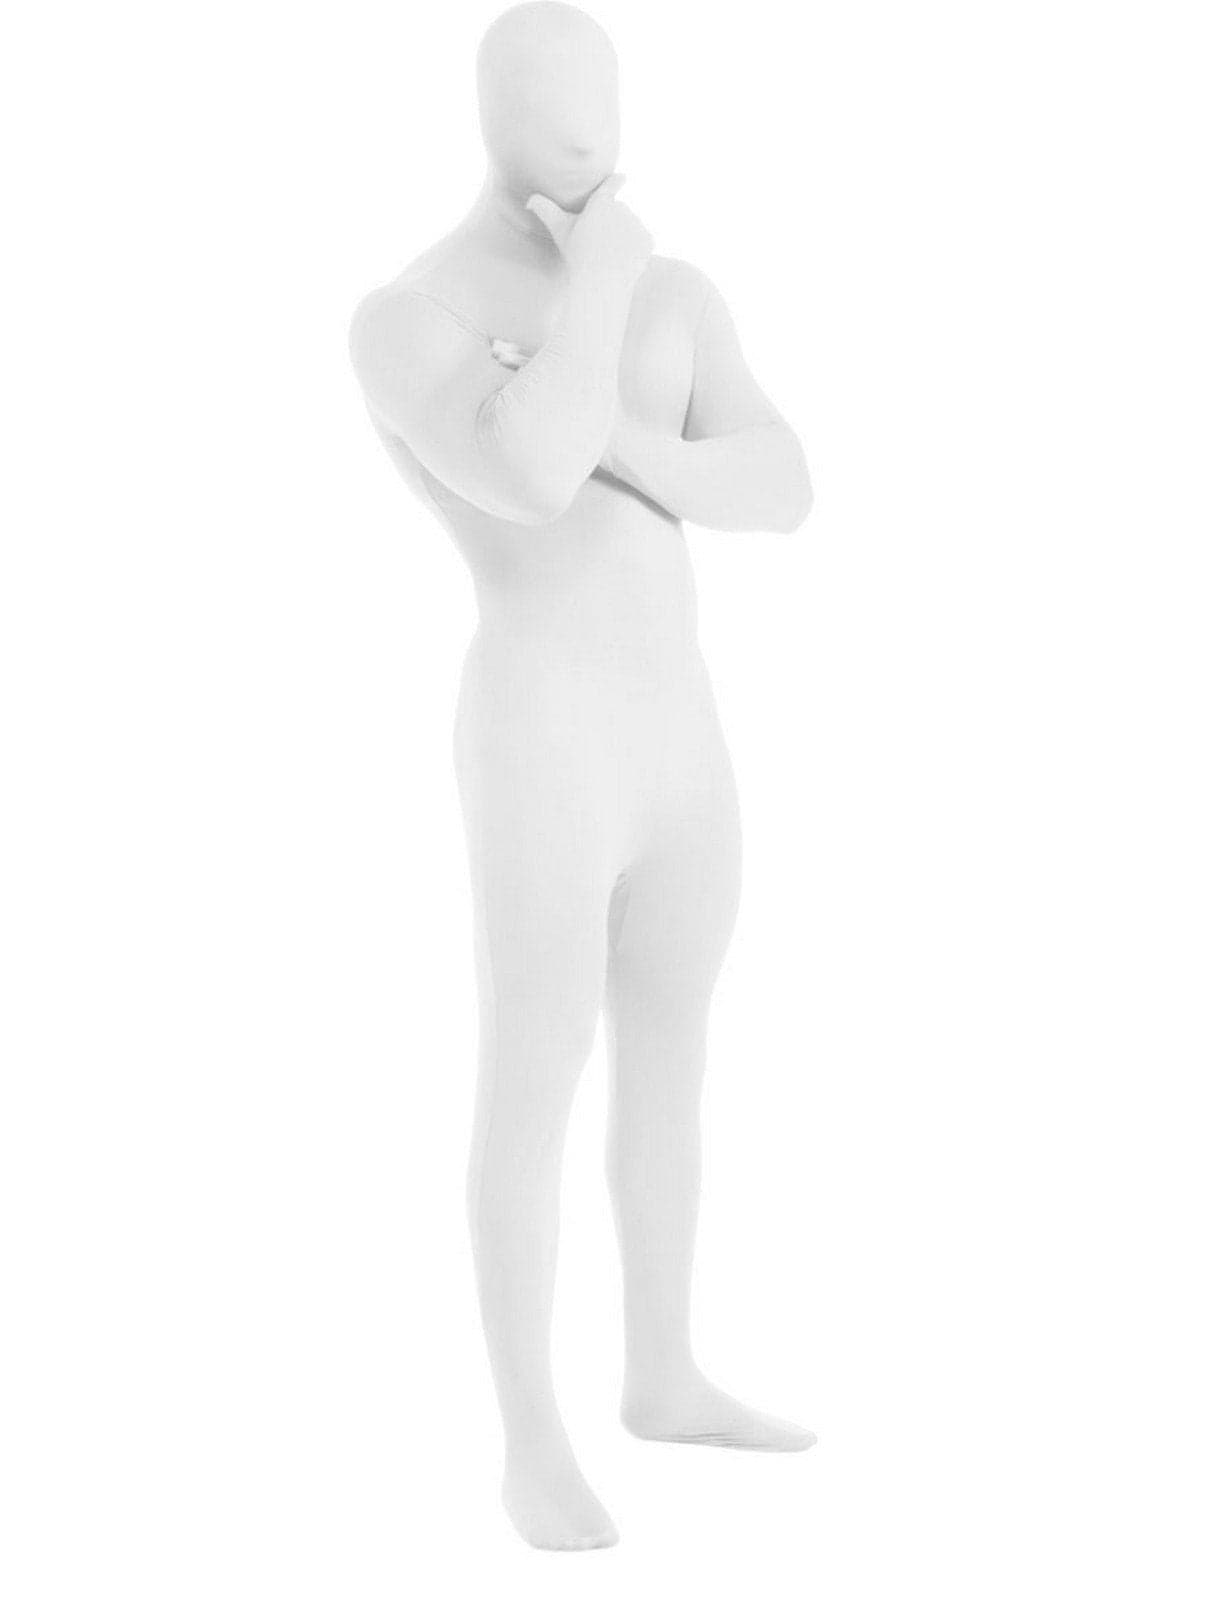 Adult Second Skin White Costume - costumes.com